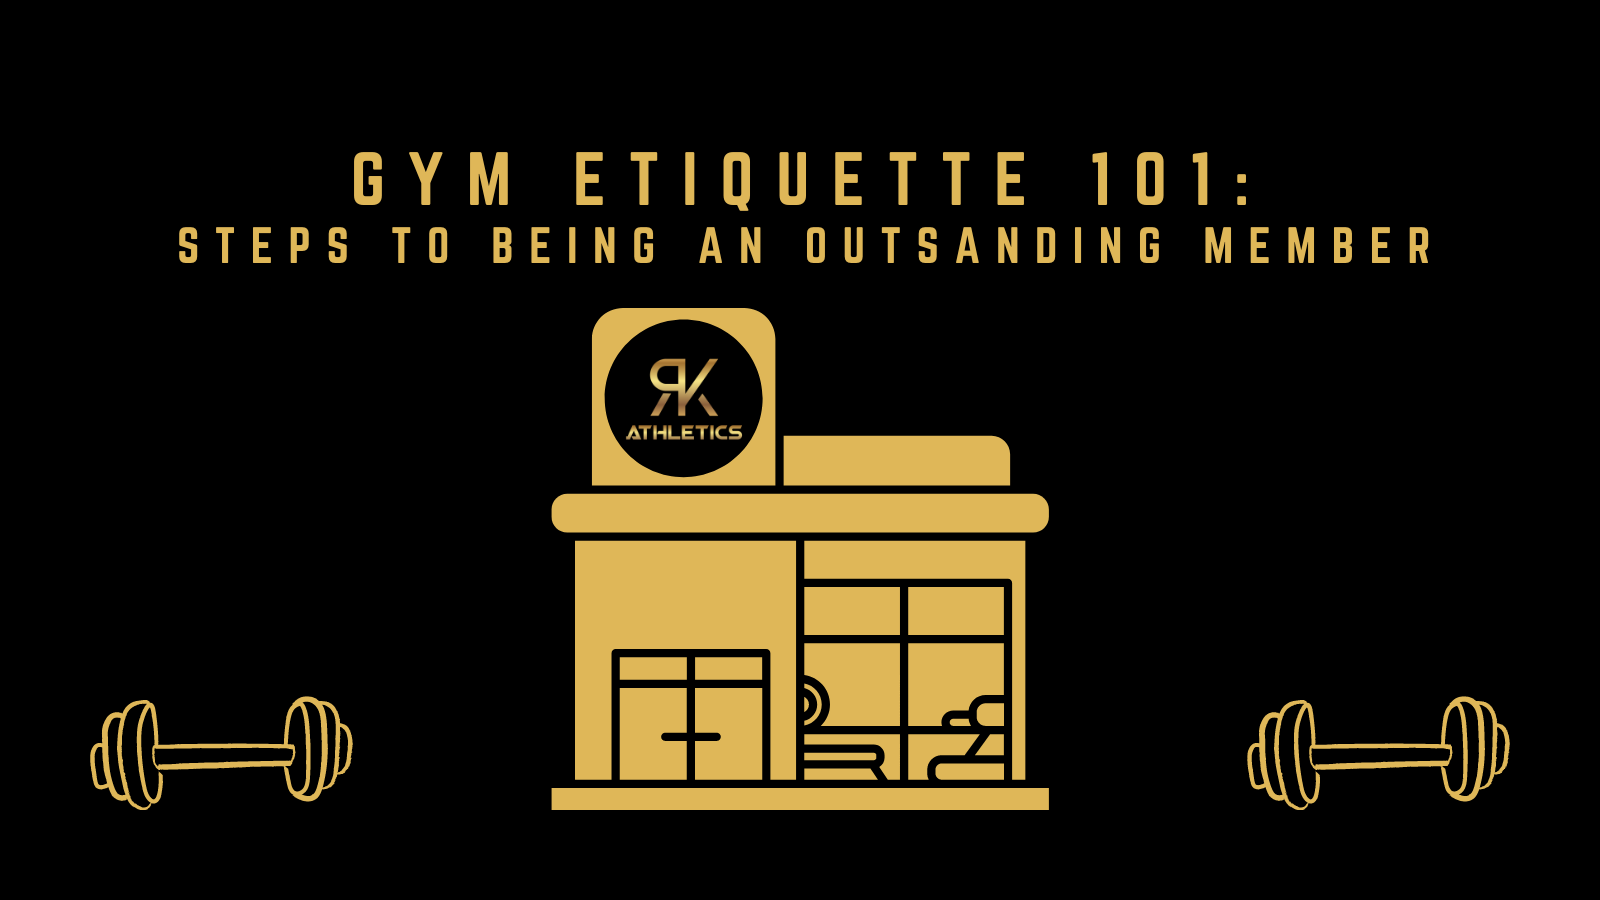 Maintaining proper Gym Etiquette